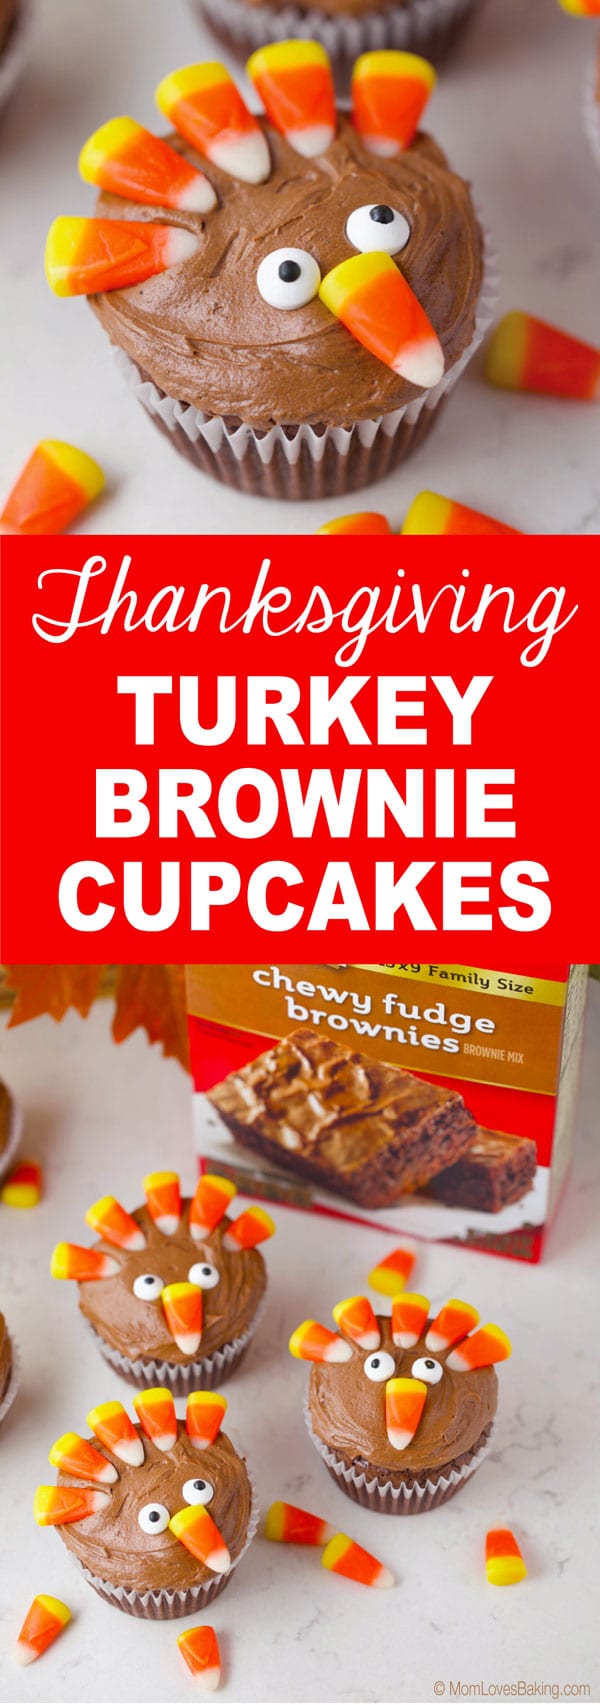 Turkey Brownie Cupcakes